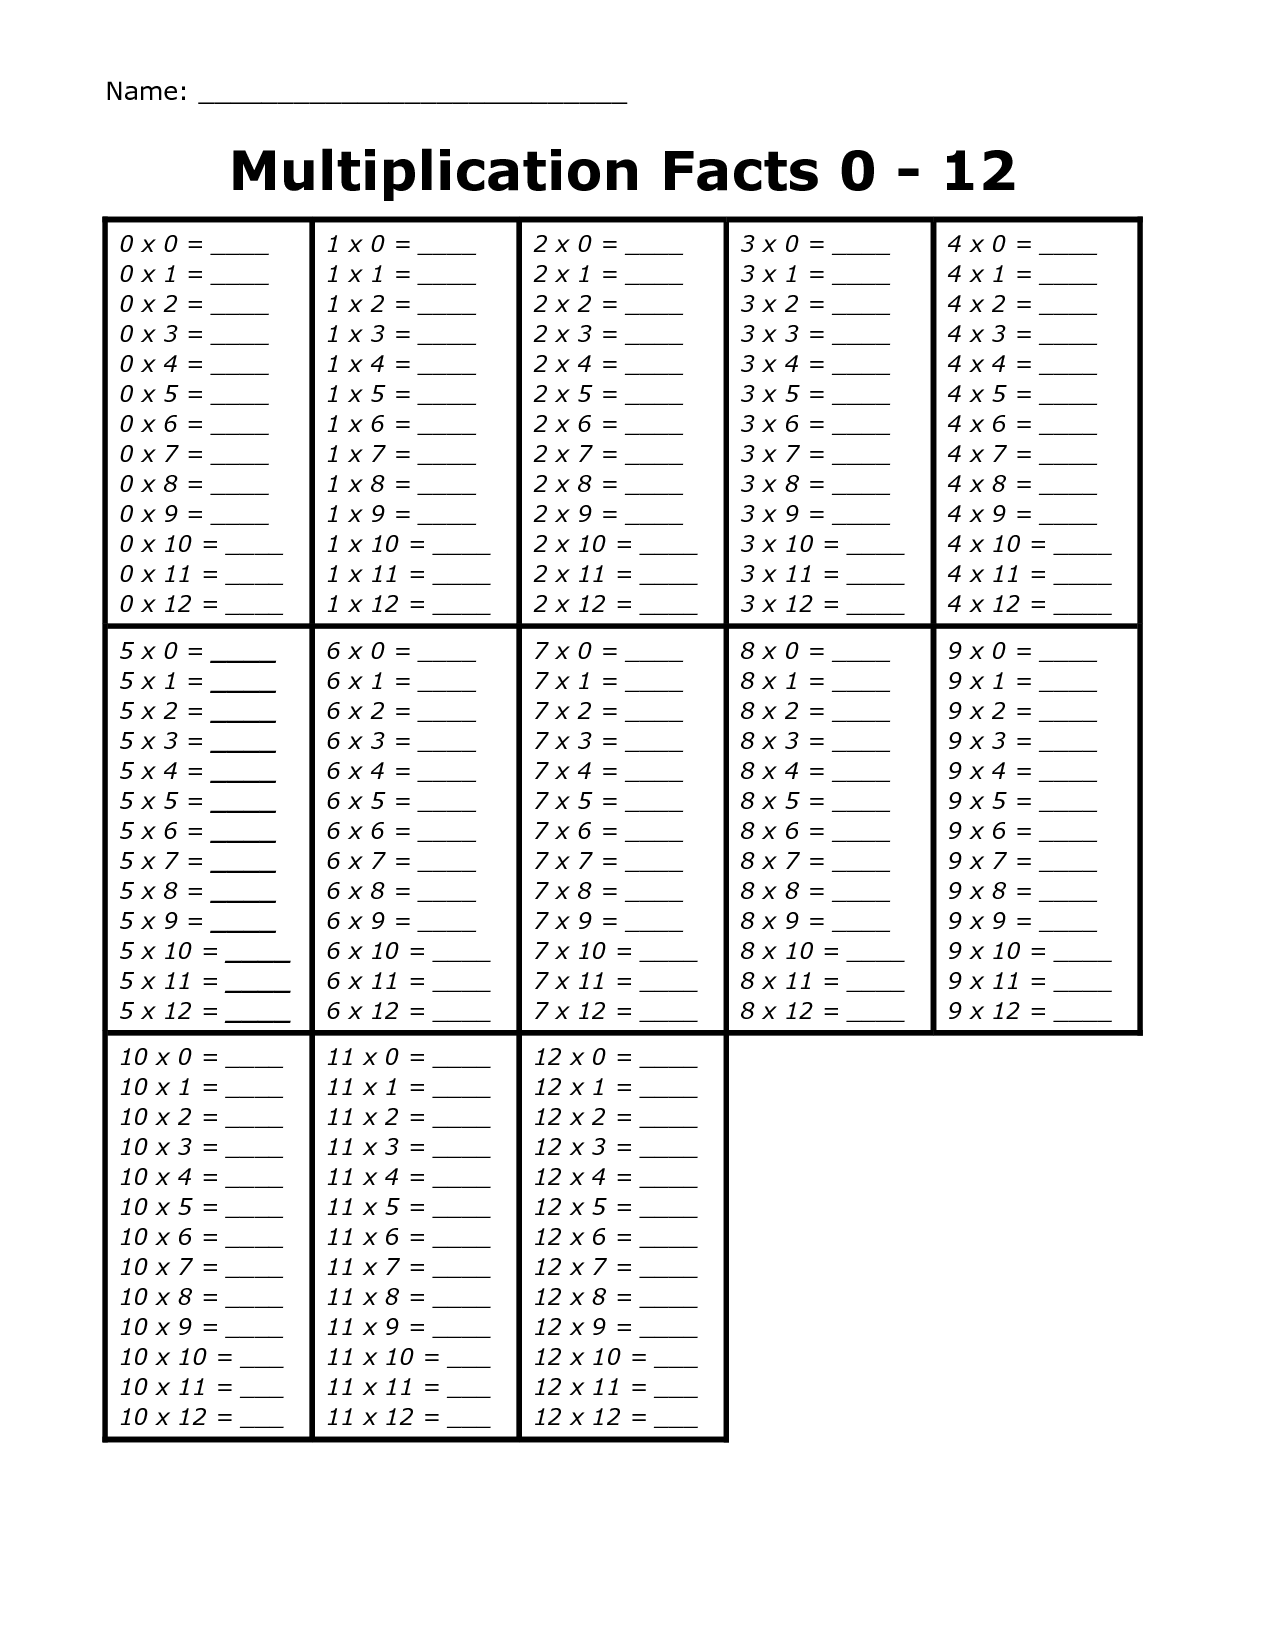 Multiplication Facts 0-12 Worksheets Image